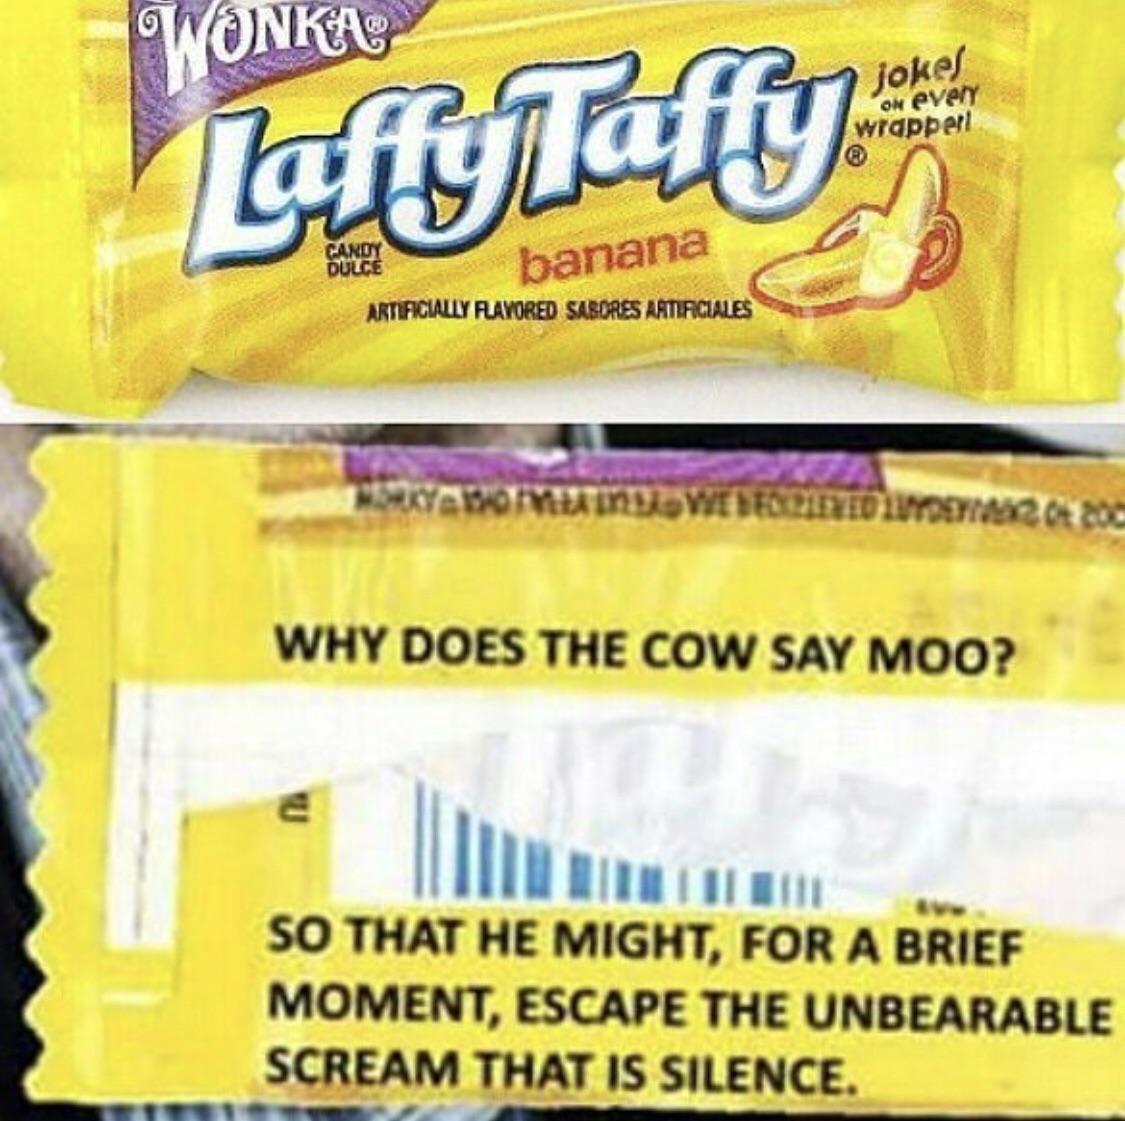 Moo's Laffy now?